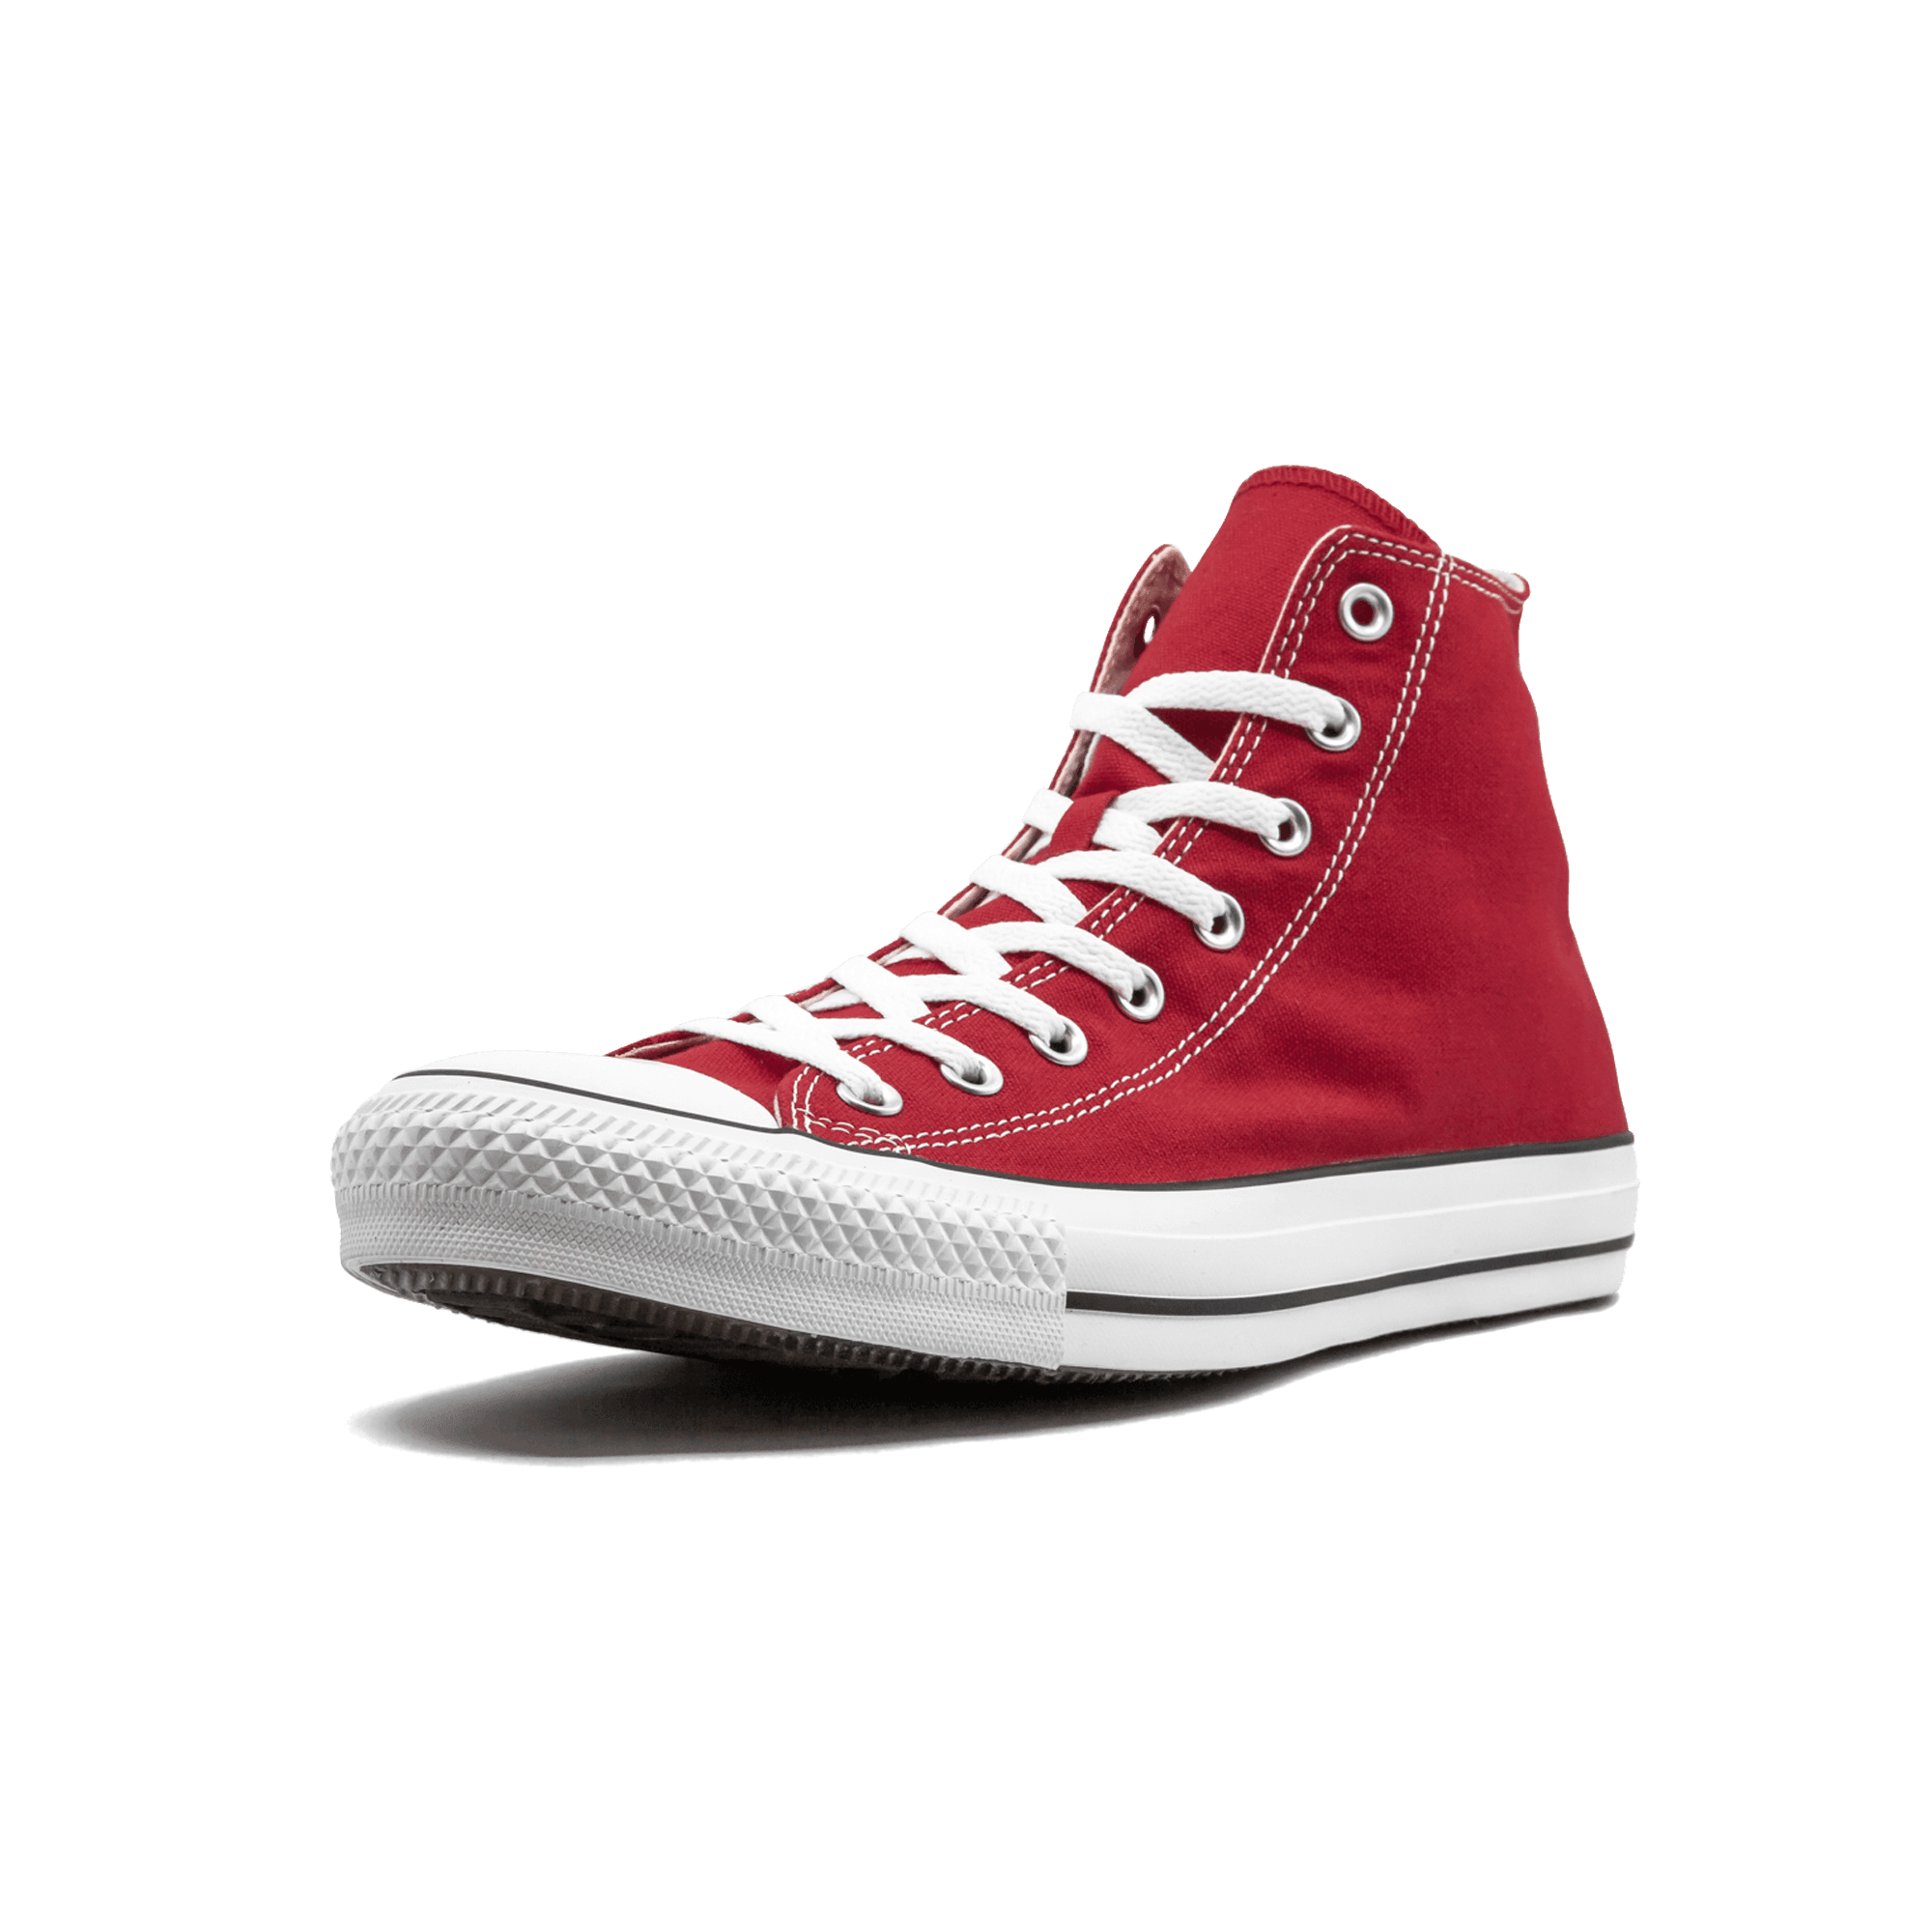 Converse Chuck Taylor All Star Hi  “Red” - Plumas Kicks